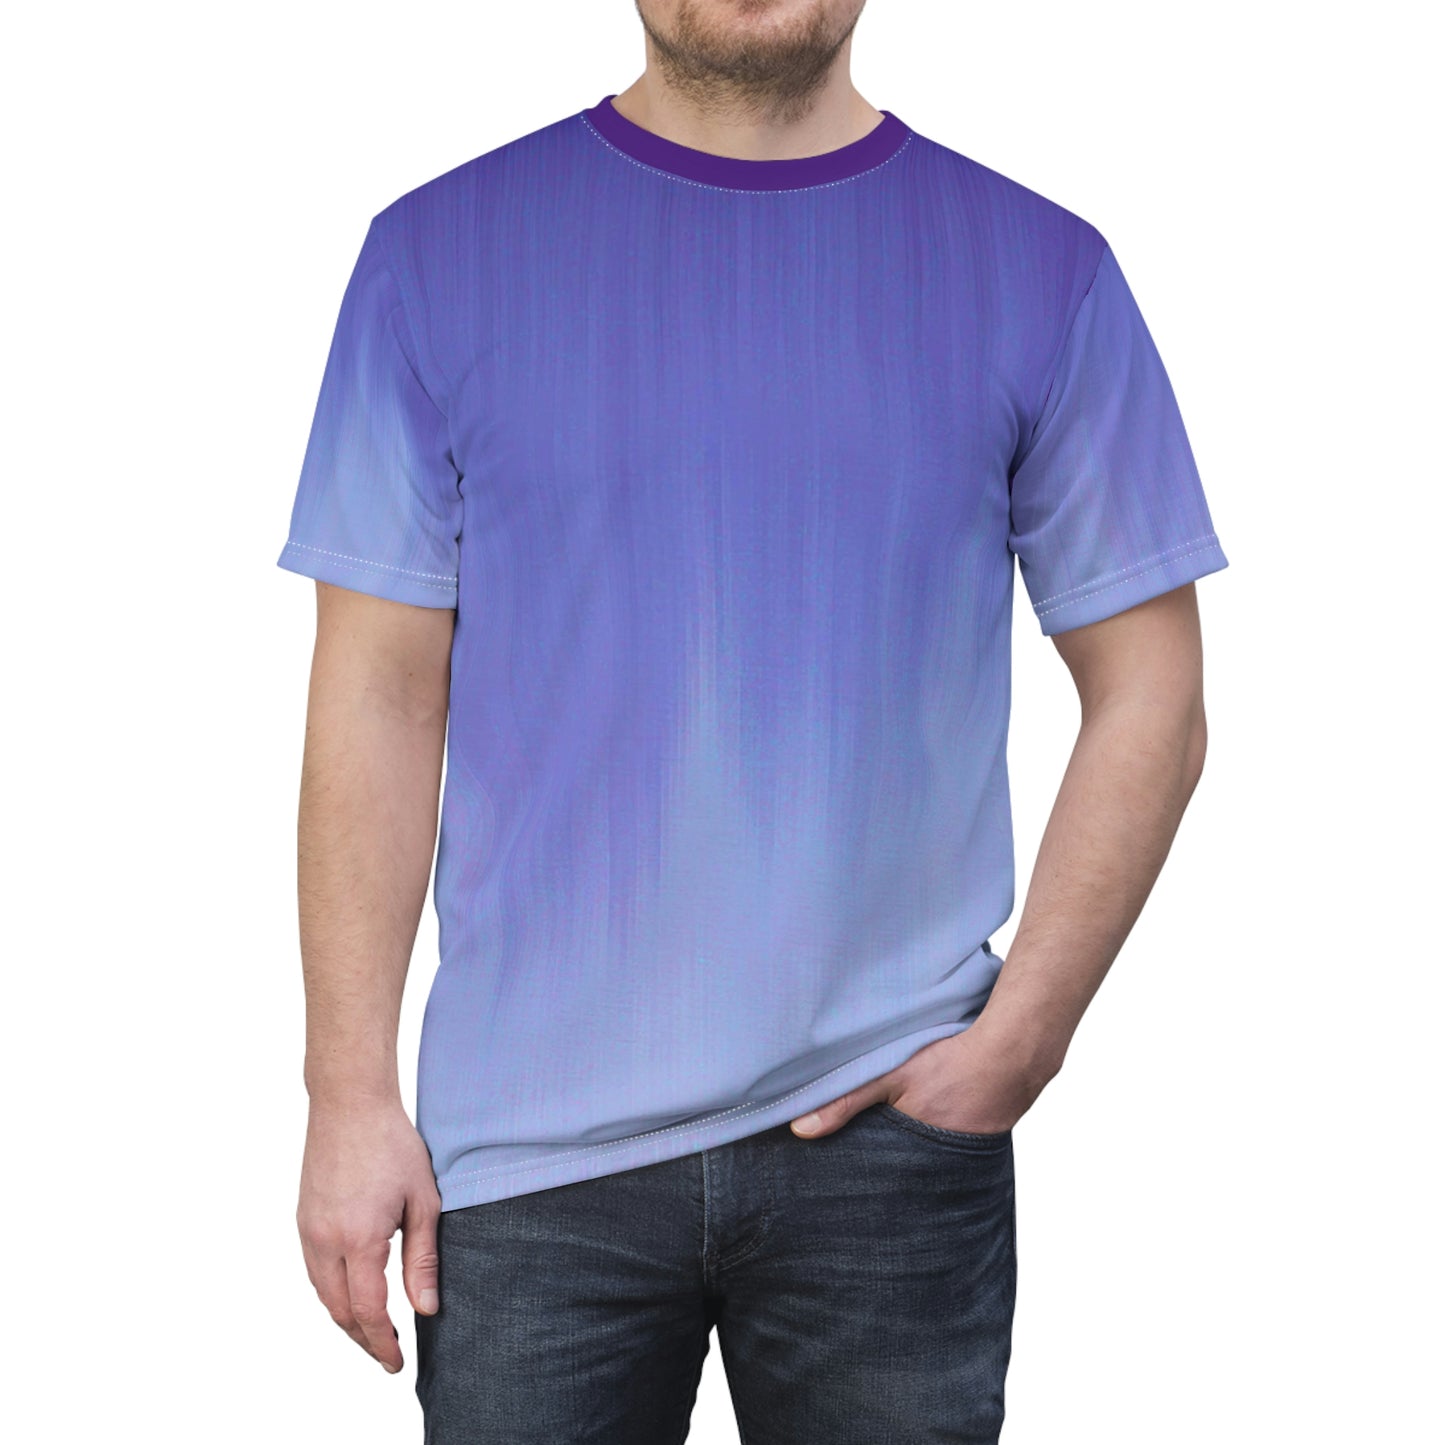 Pixel Brush 3 Unisex T-Shirt